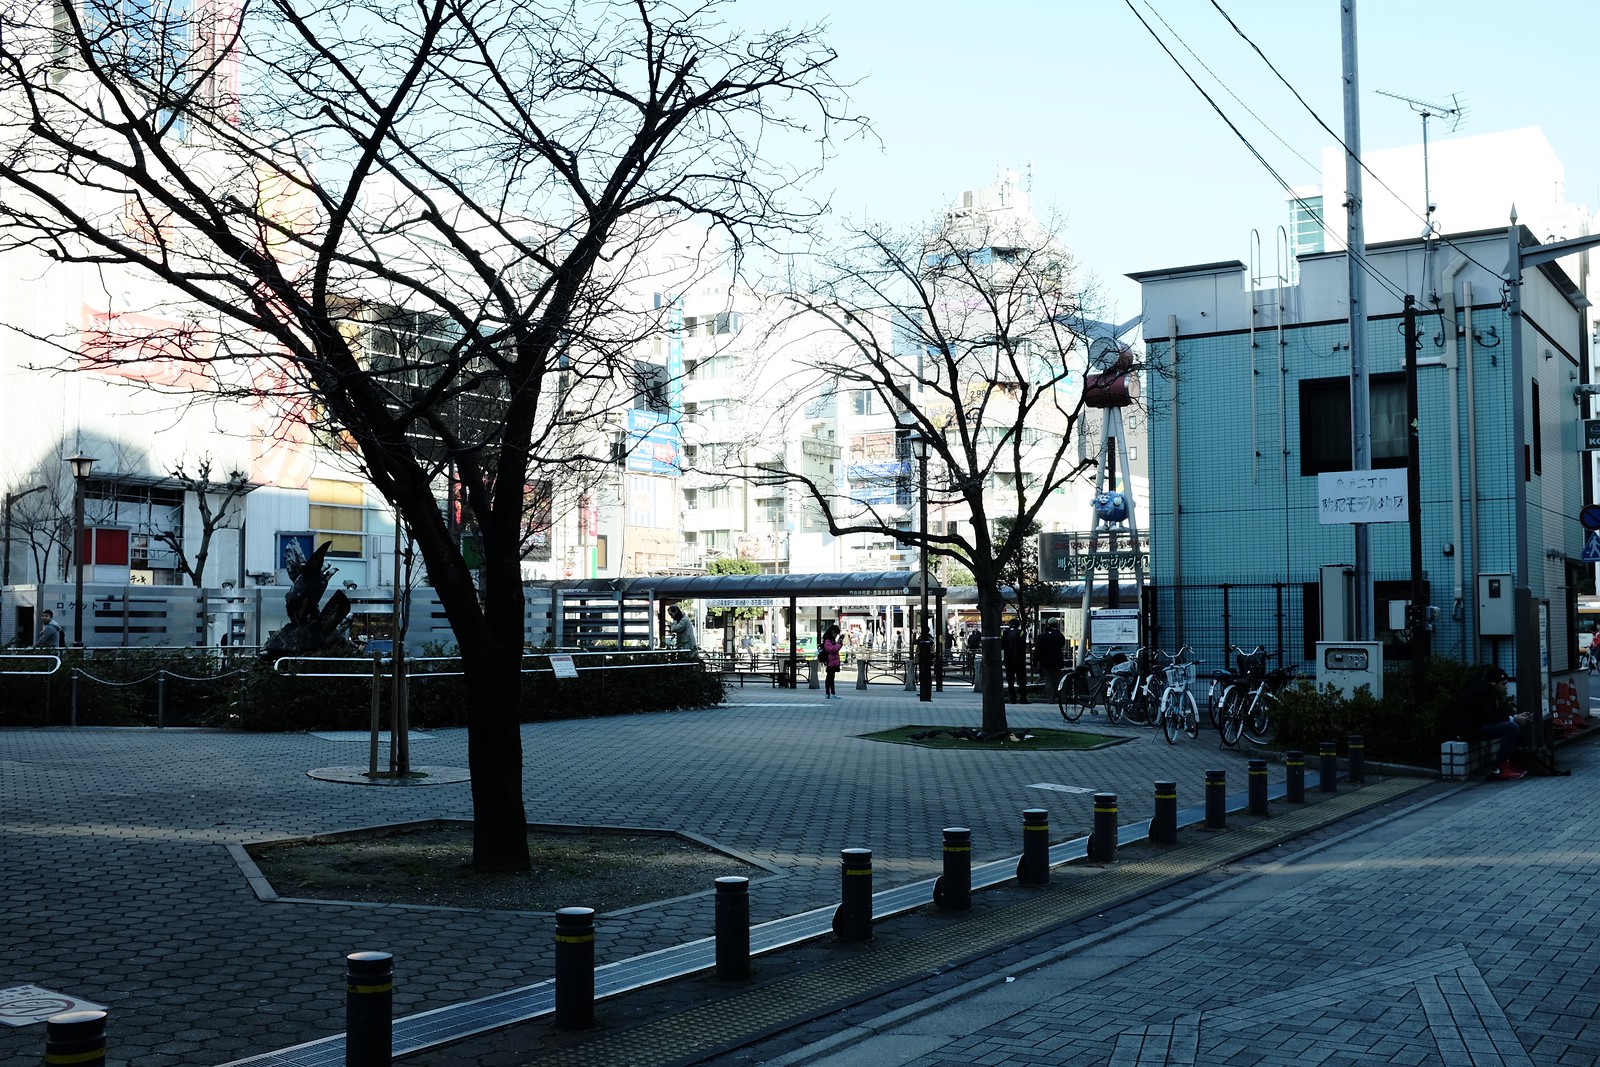 The Tokyo Kameido photo by FUJIFILM X100S.